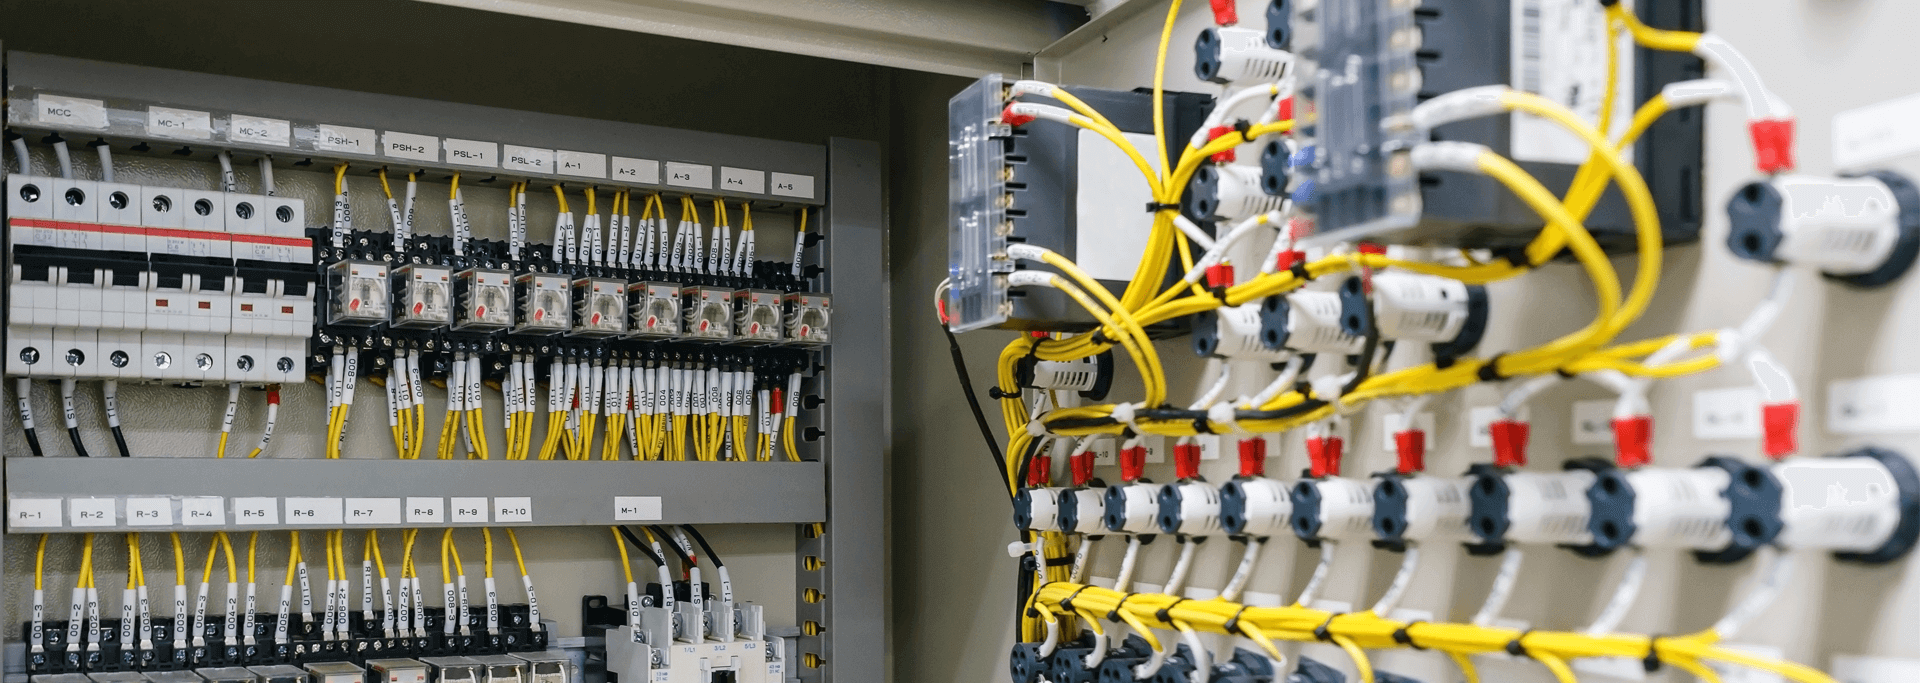 bcs group,Electric control panel enclosure power distribution electricity